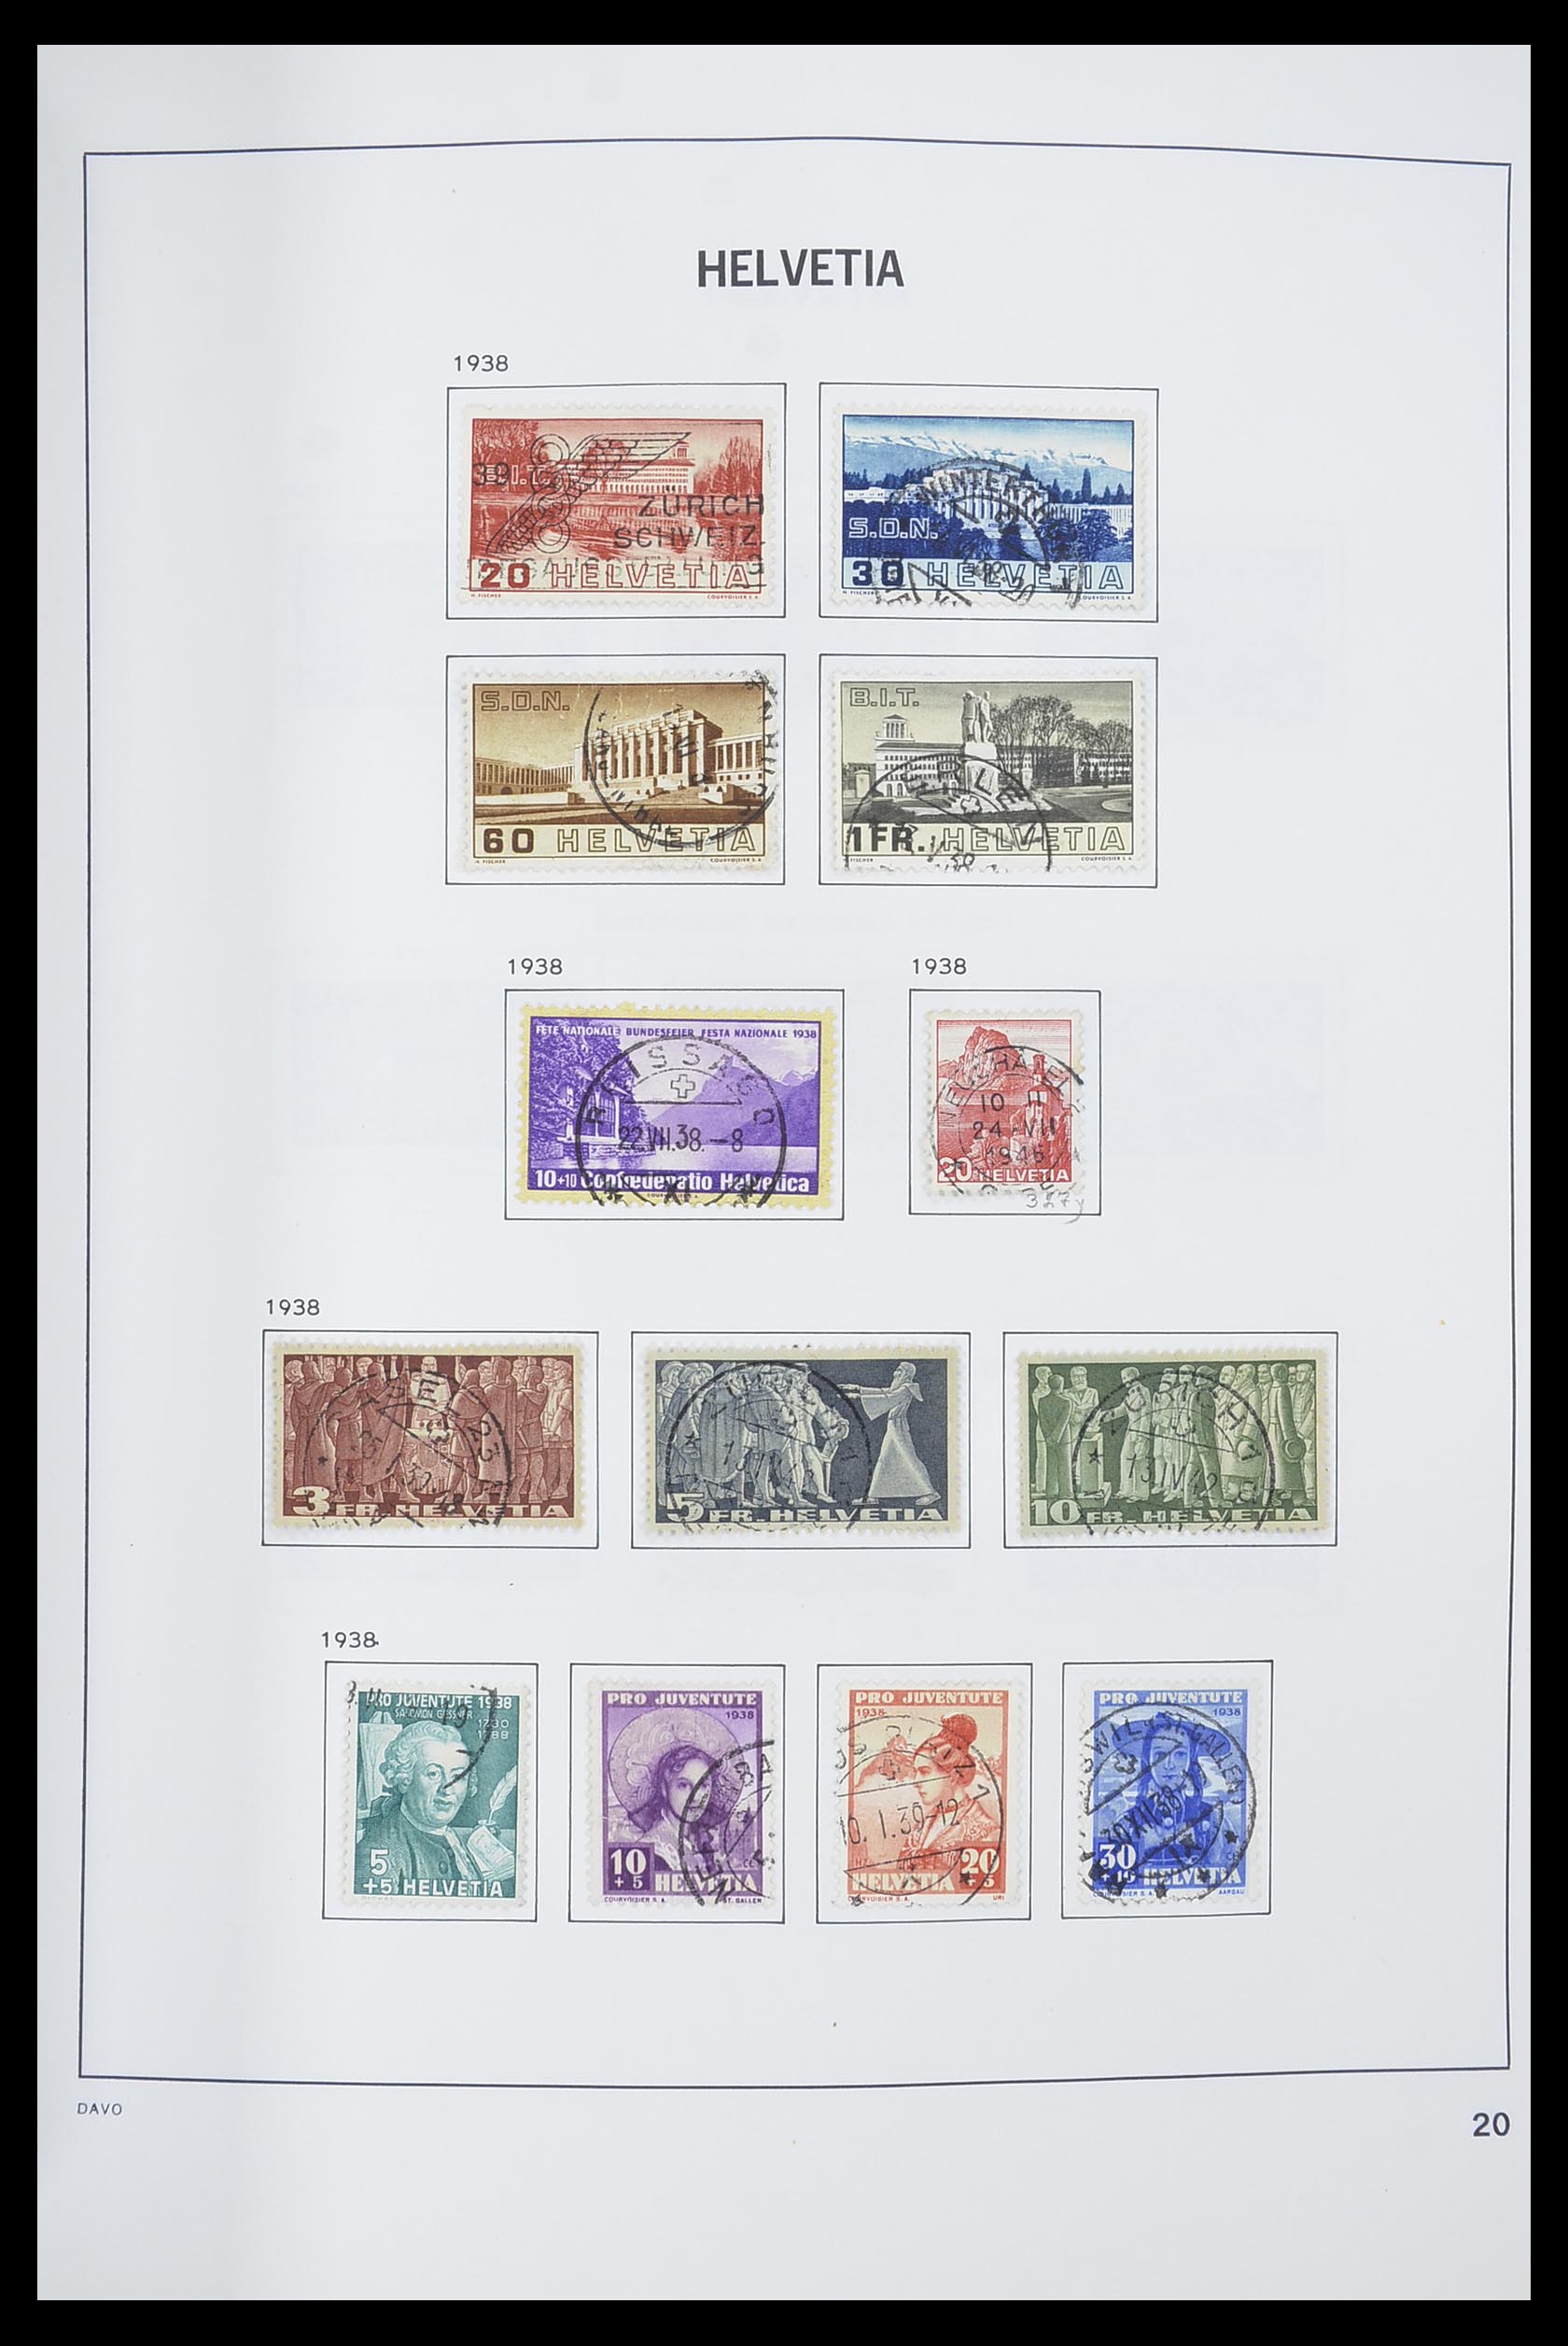 33559 021 - Stamp collection 33559 Switzerland 1850-2000.